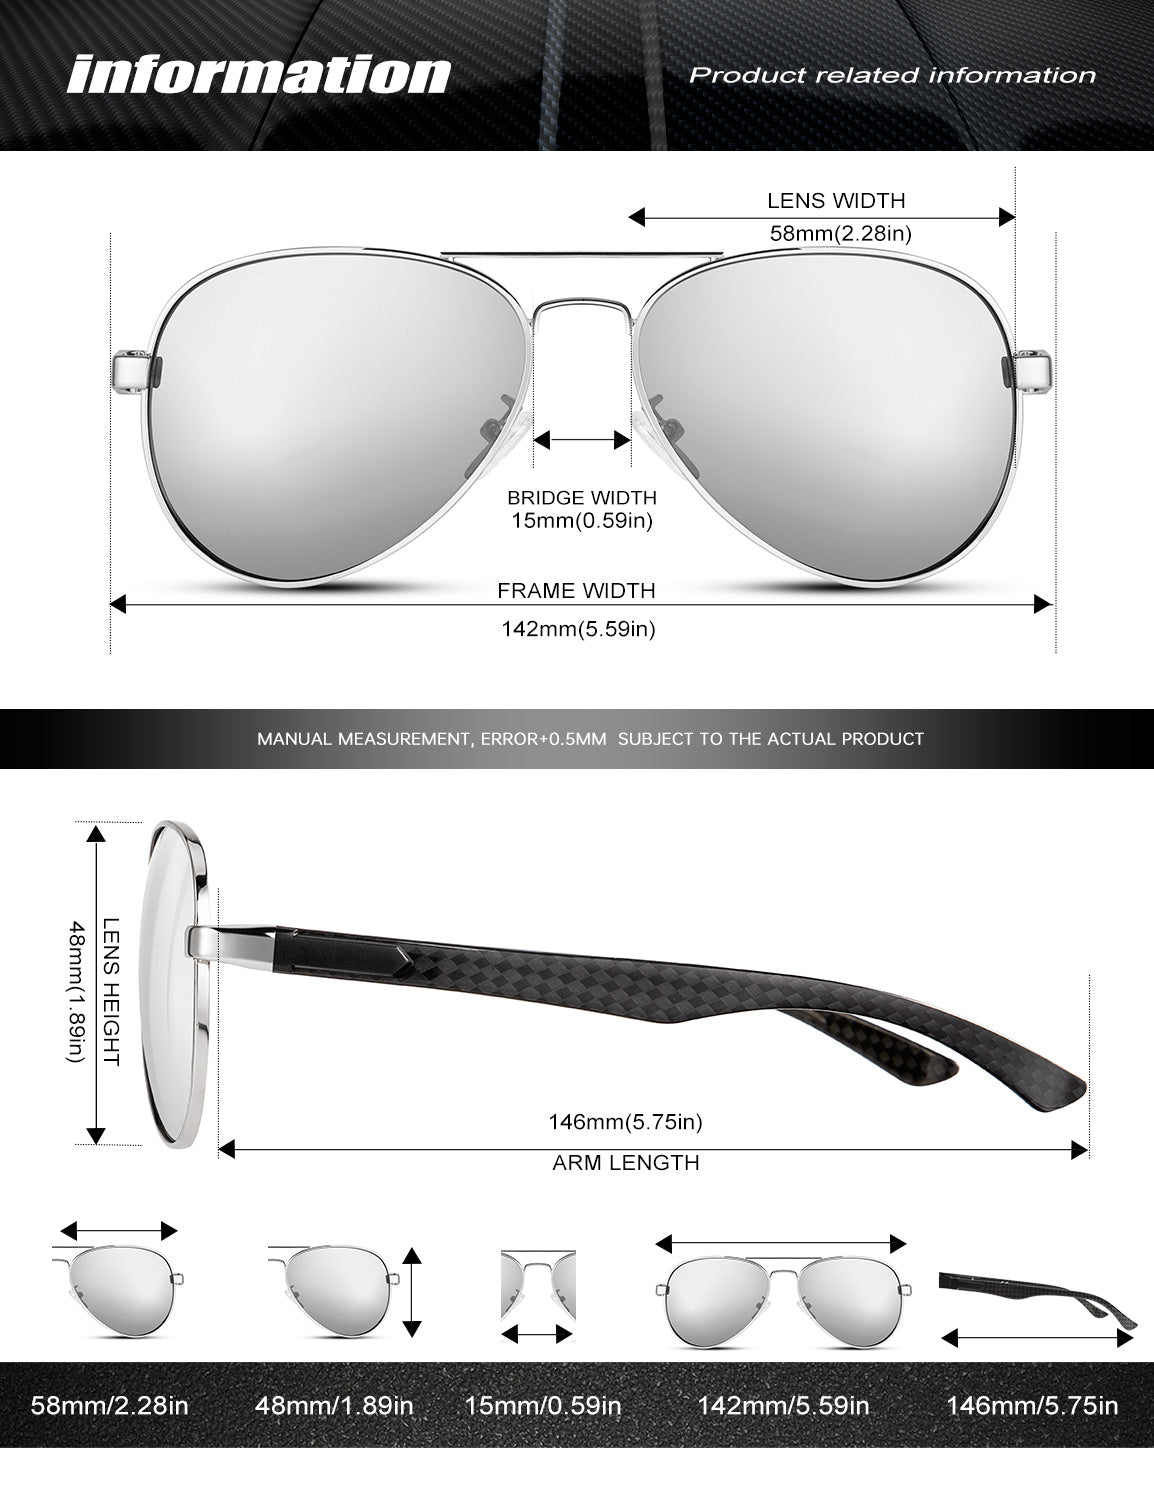 Carbon Fiber Temple Polarized Pilot Sunglasses S55-1